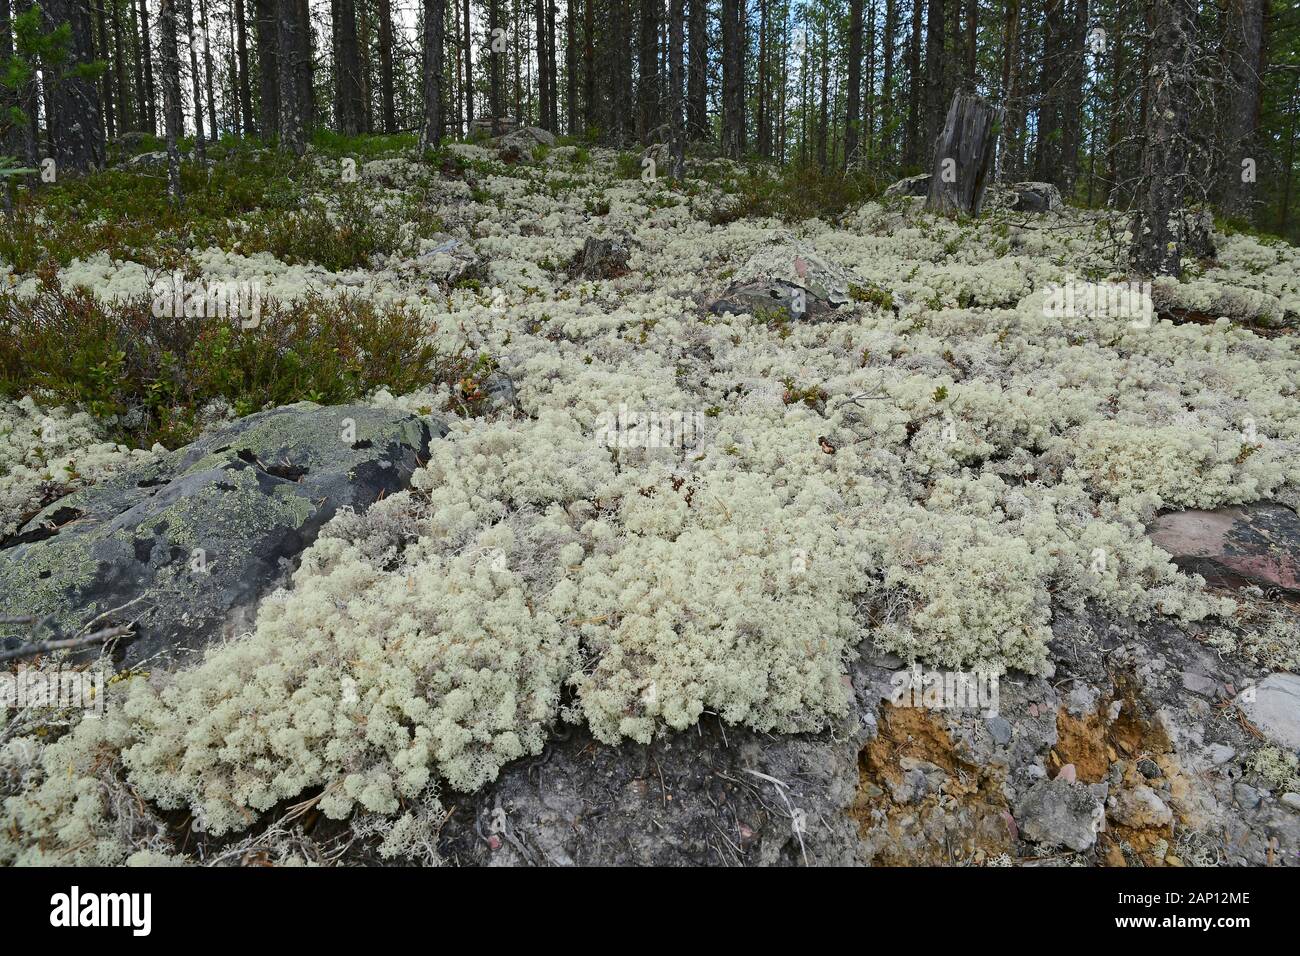 Pillowy Reindeer Lichen (Cladonia rangiferina) covering the forest floor. Sweden Stock Photo